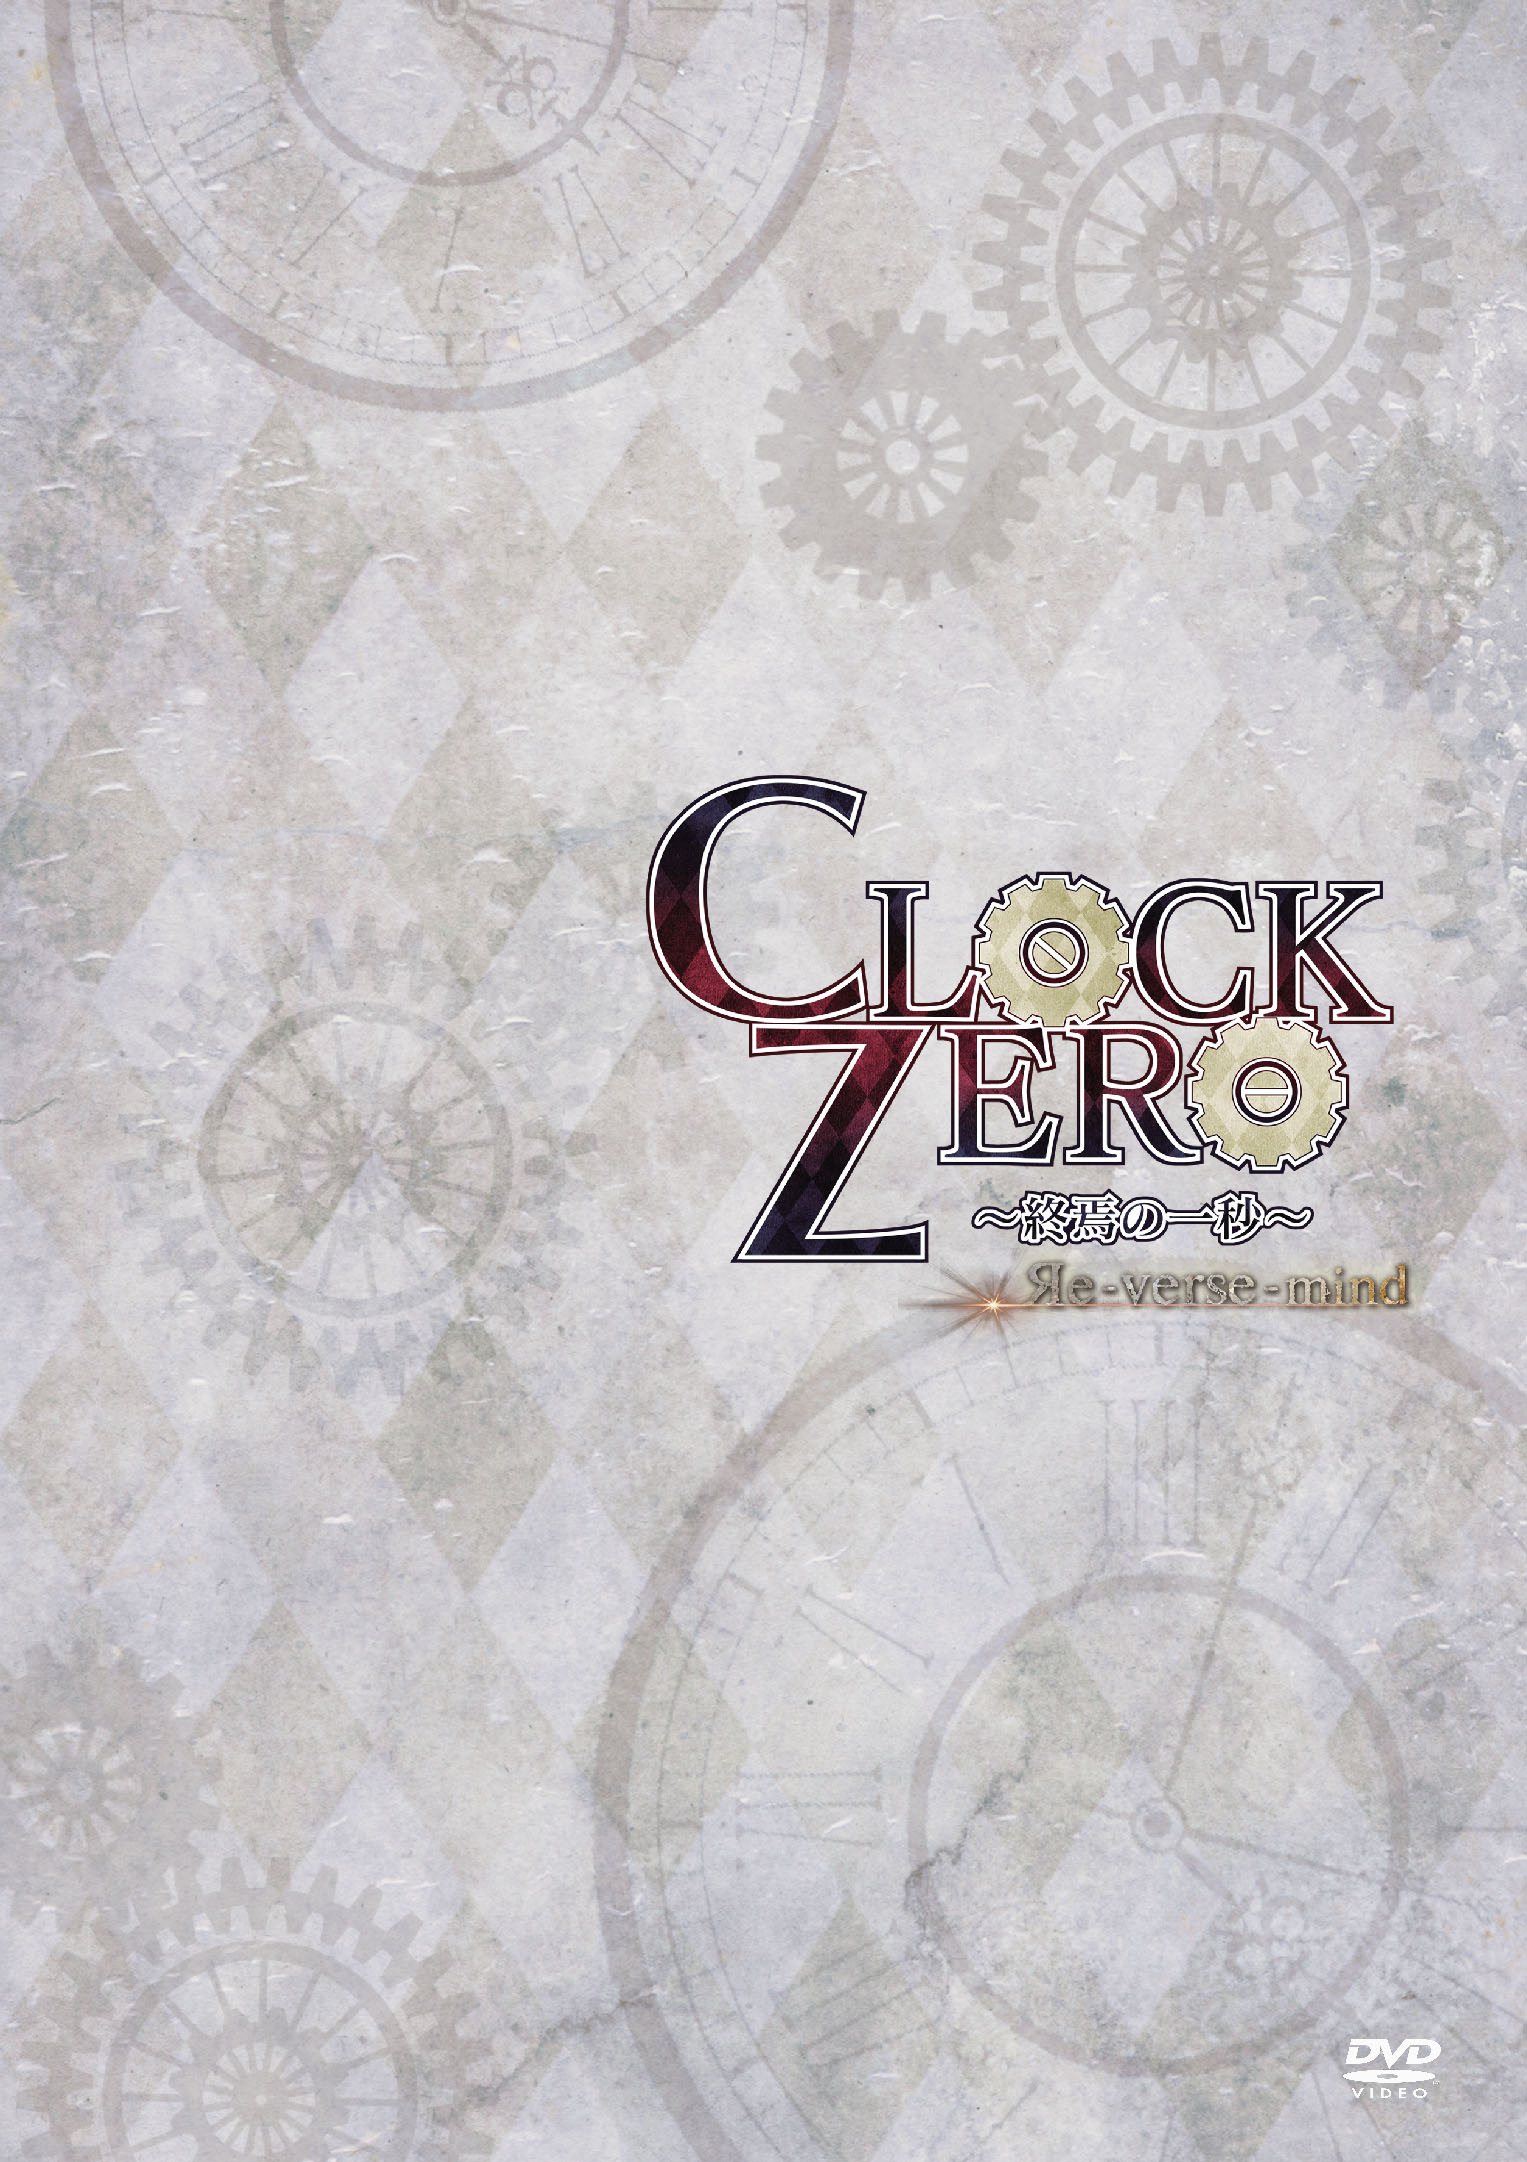 CLOCK ZERO～終焉の一秒～ Re-verse-mind